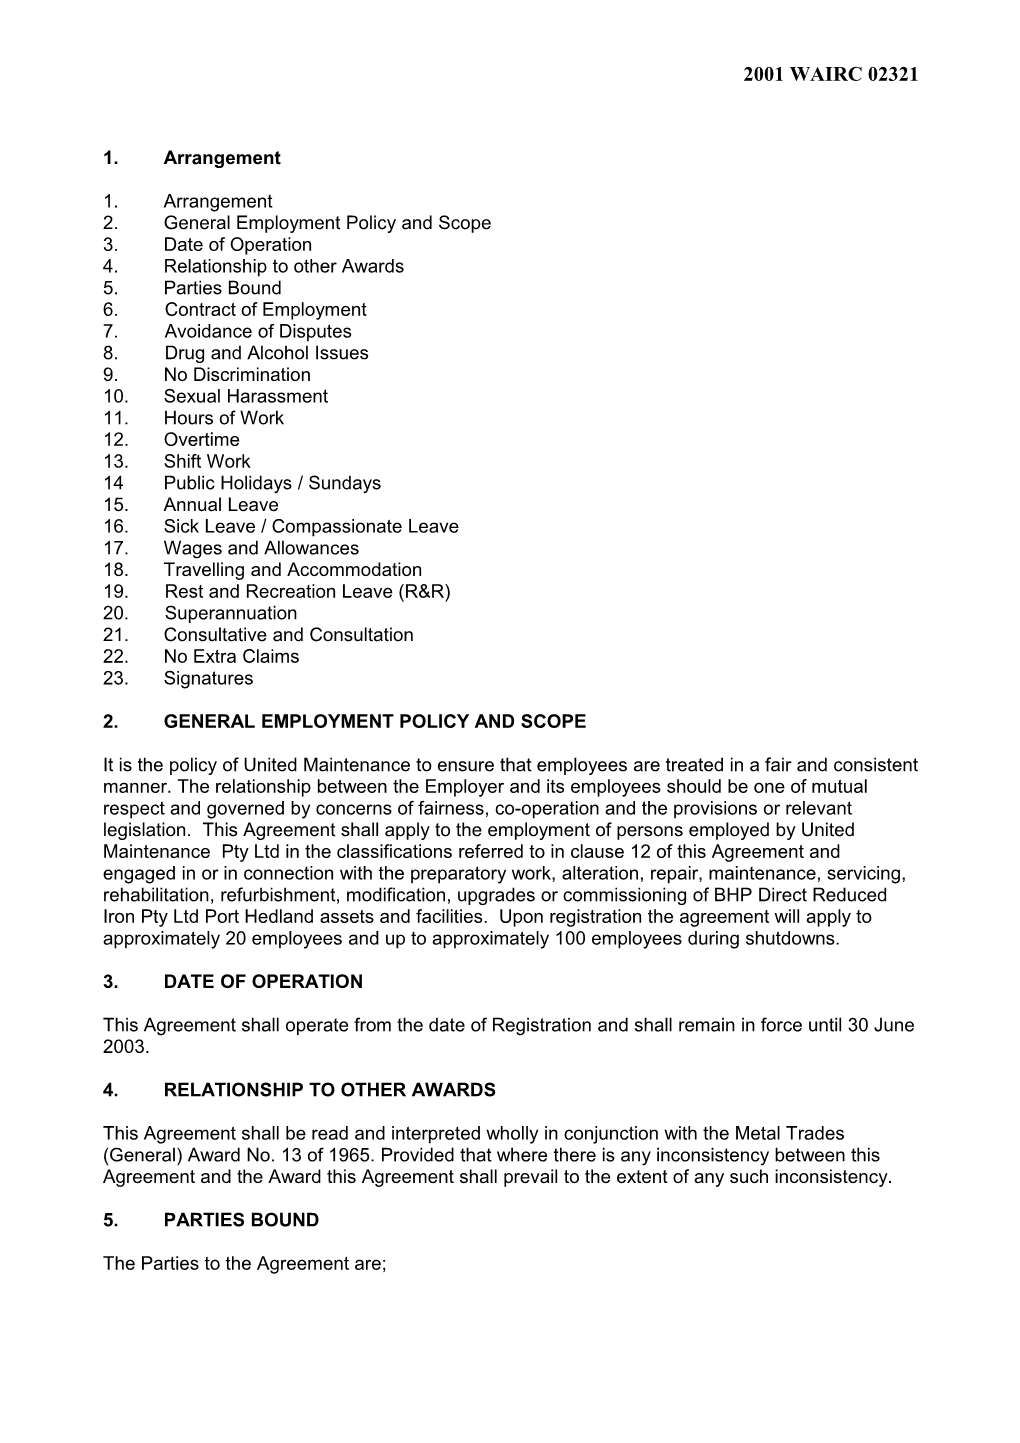 United Maintenance Pty Ltd Hbi Agreement